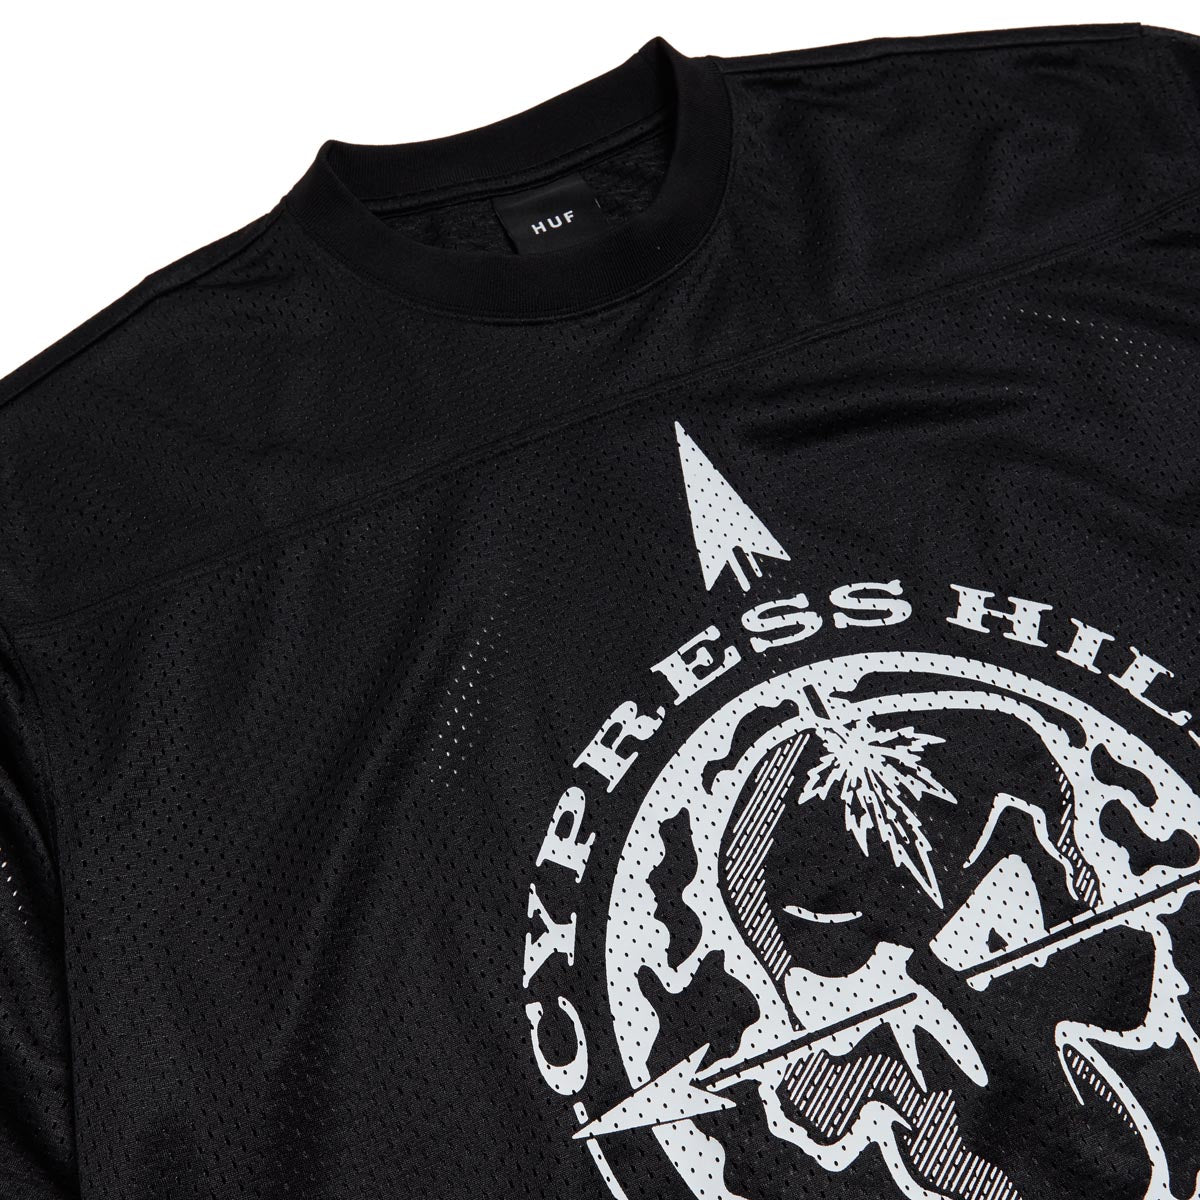 Huf x Cypress Hill Compass Mesh Jersey - Black image 3